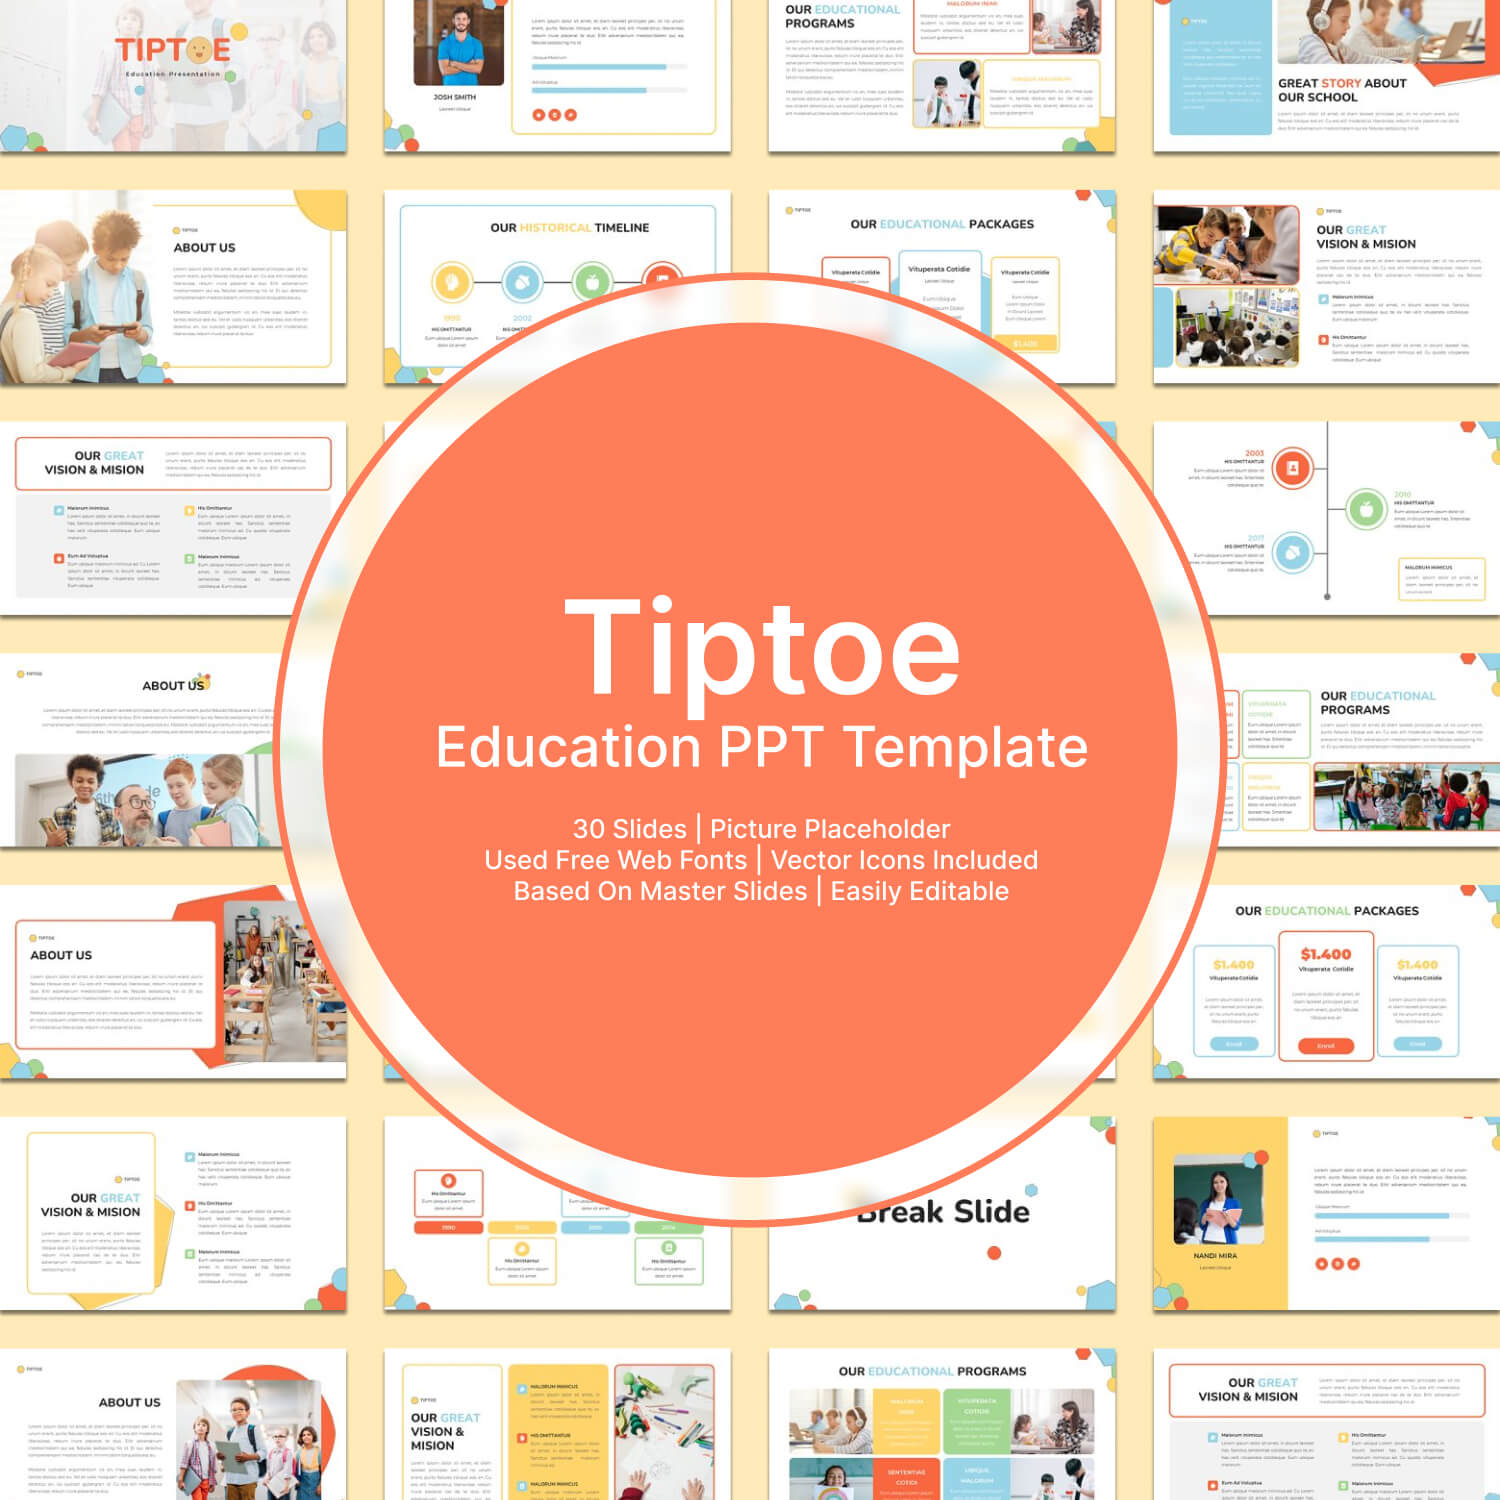 Tiptoe education ppt template.